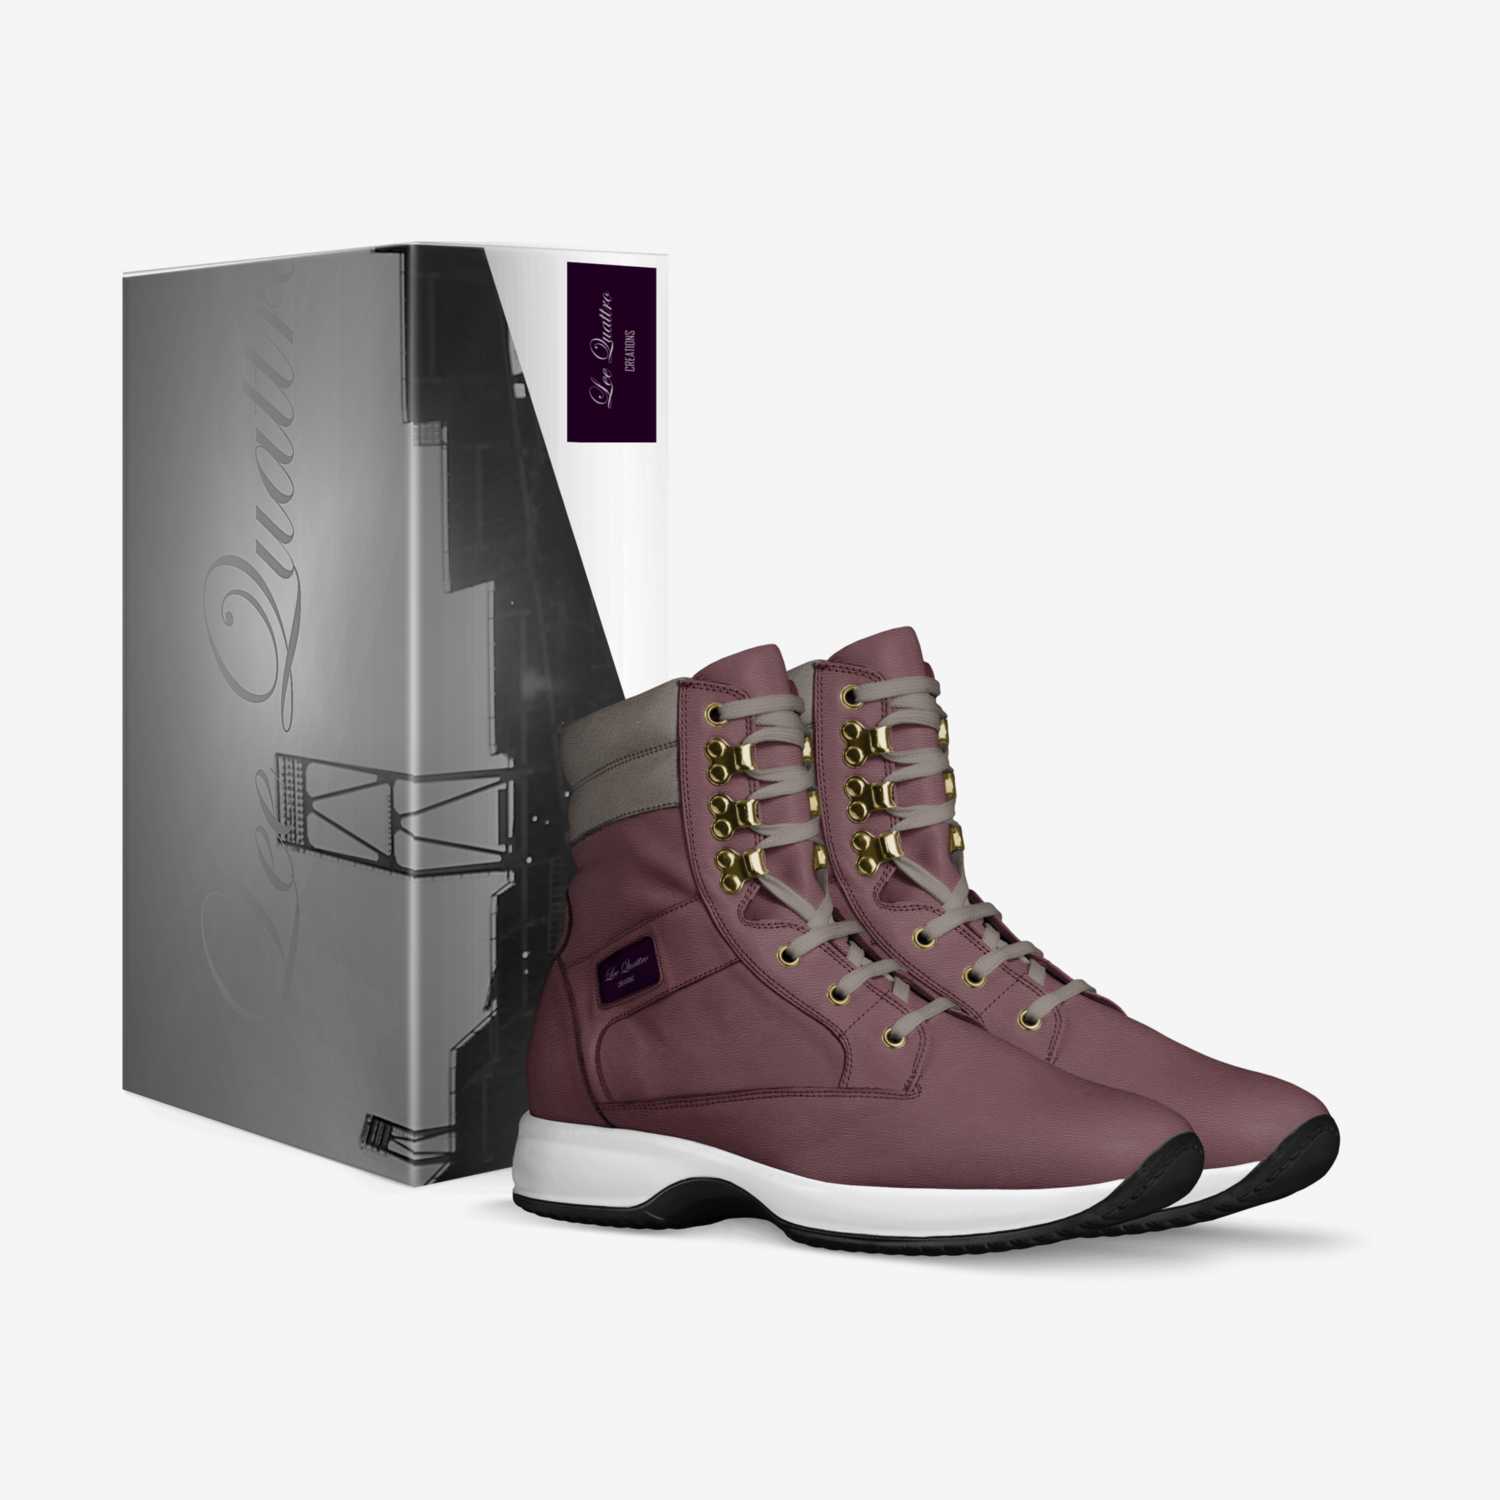 LQMANN custom made in Italy shoes by Takura M | Box view